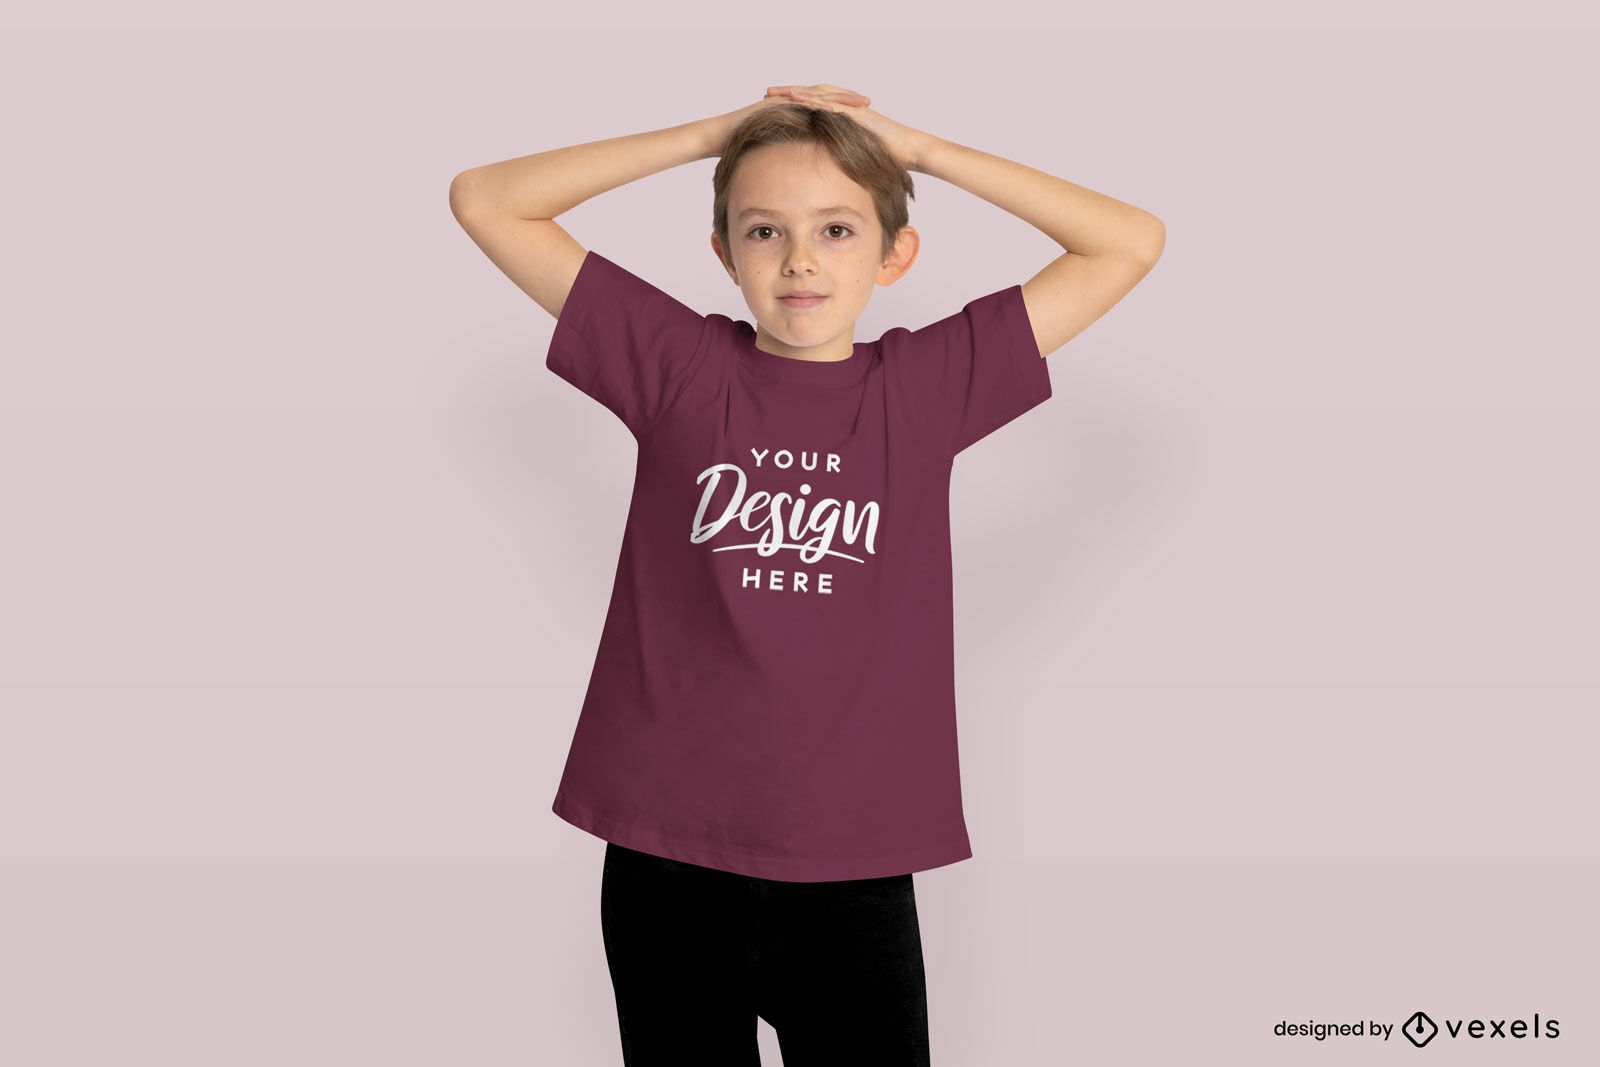 Little boy posing and wearing t-shirt mockup